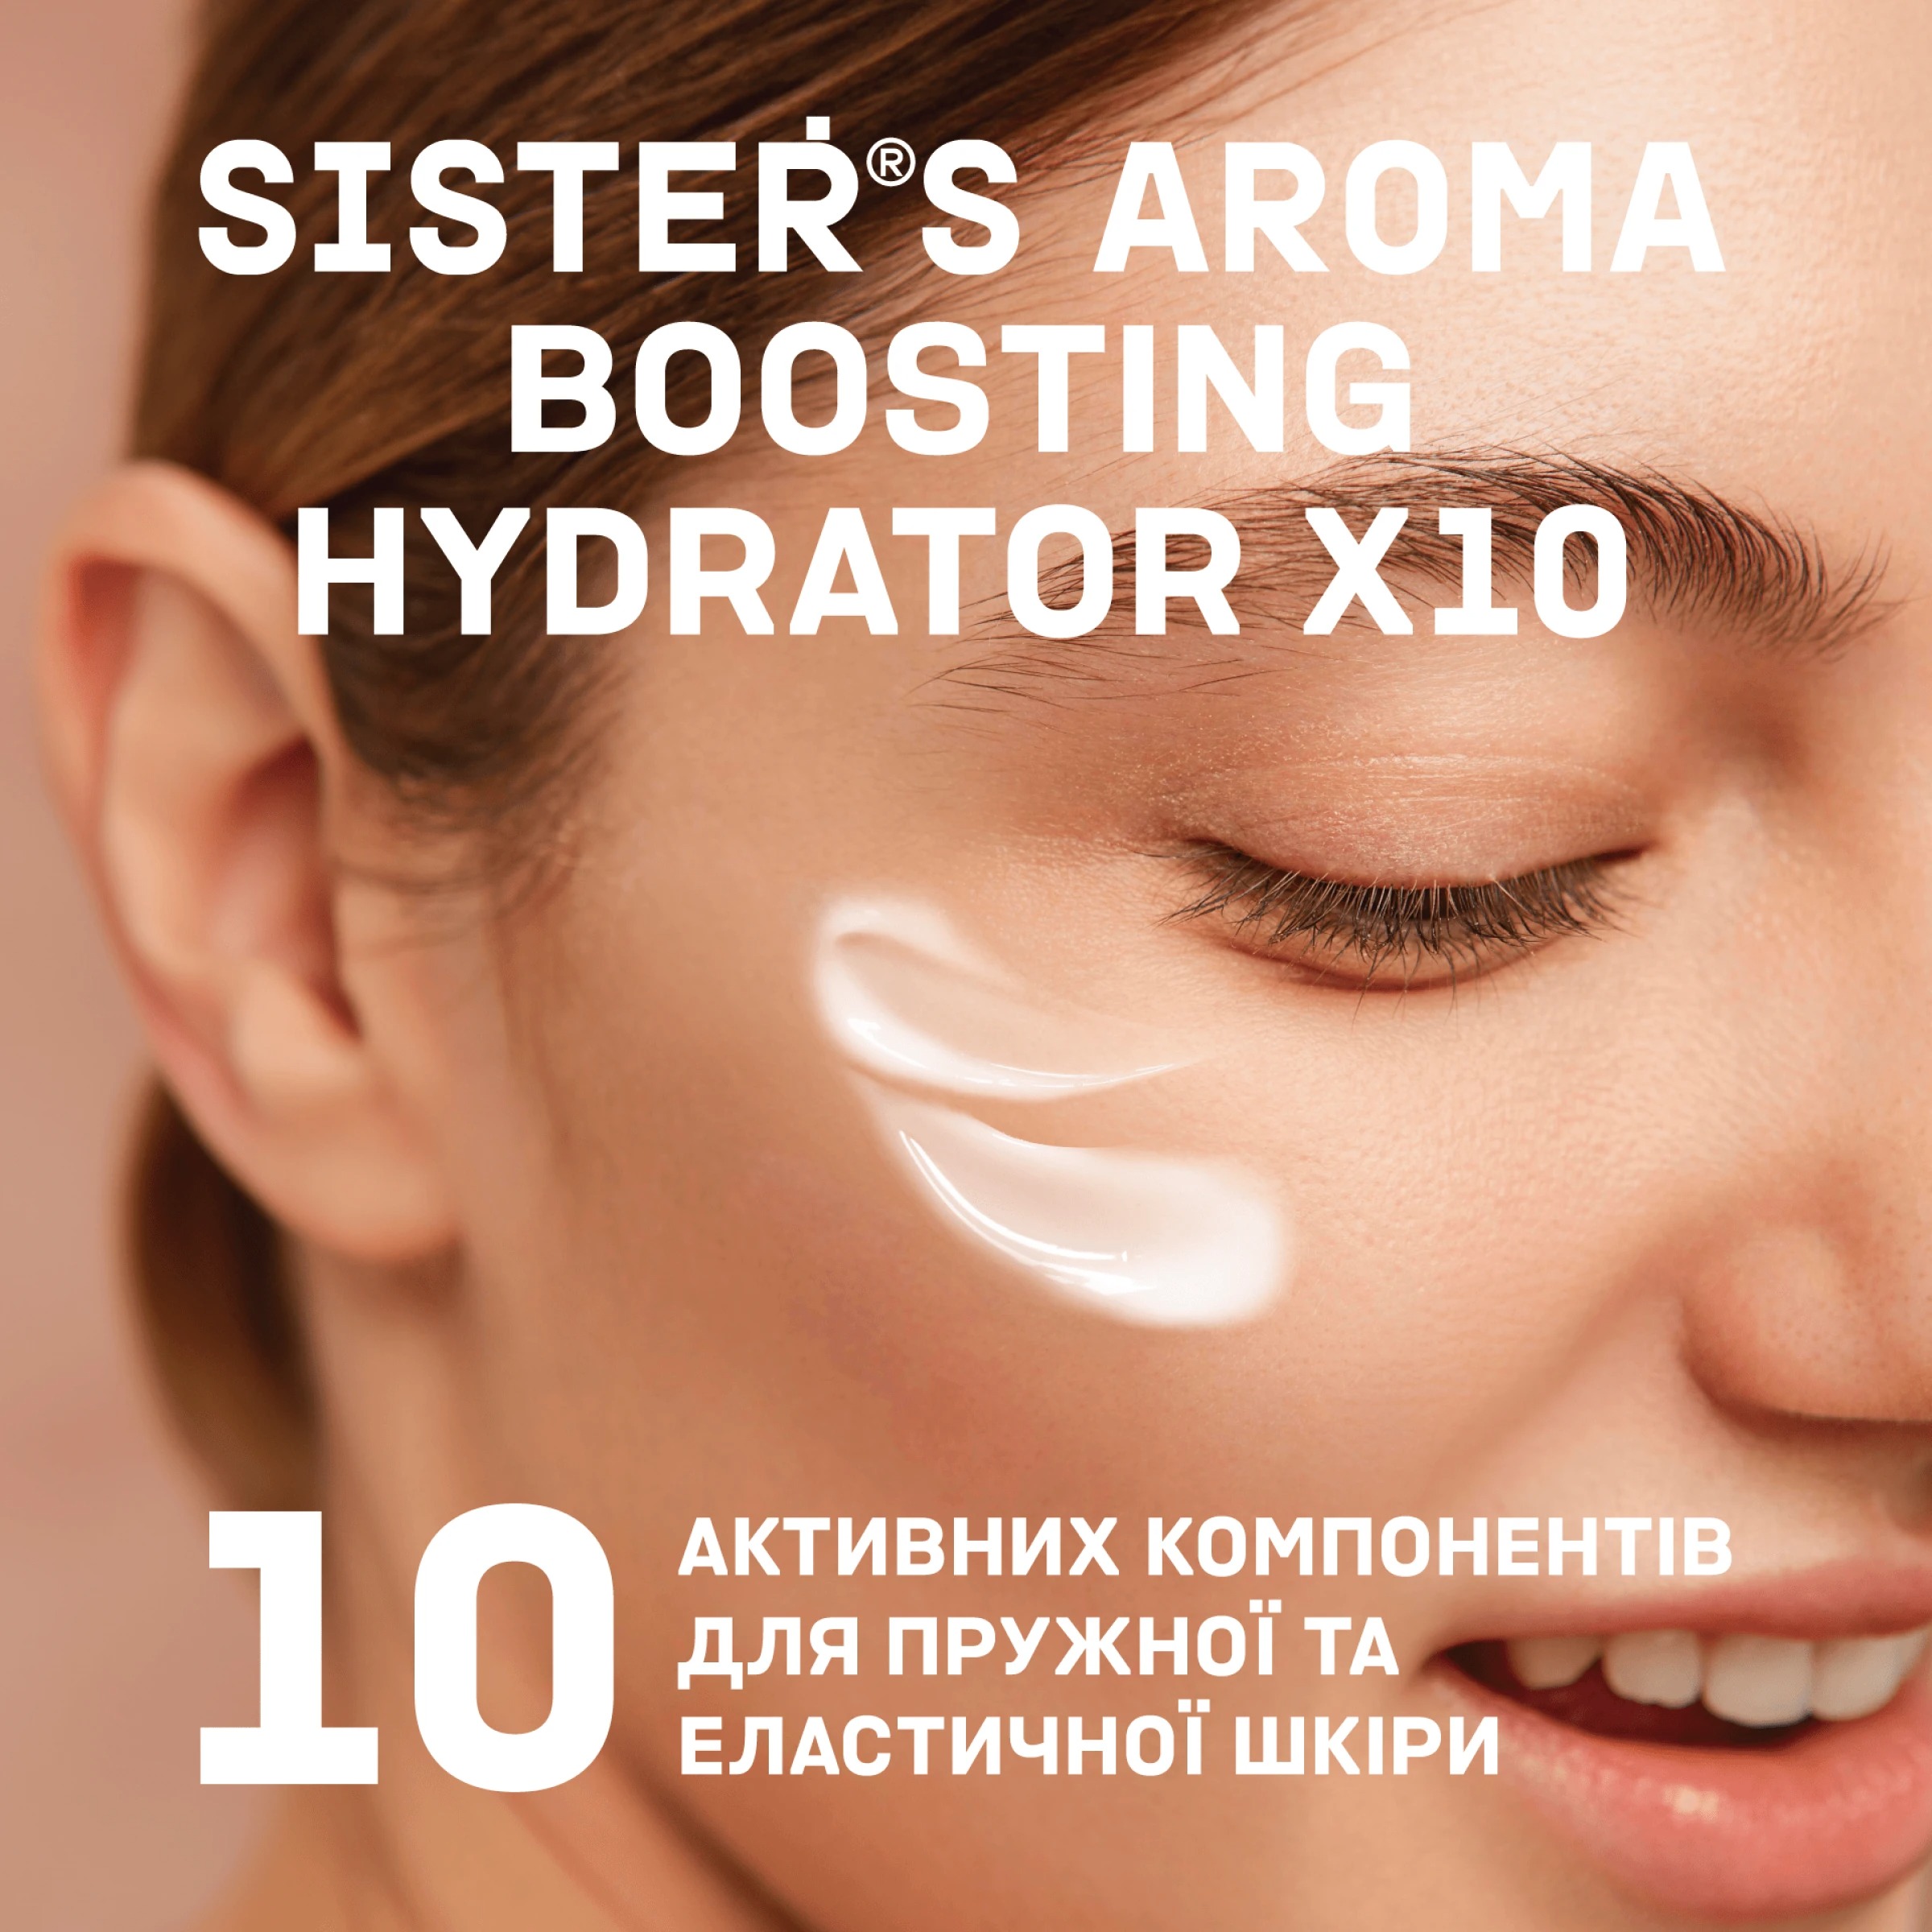 Гель-крем для лица Sister's Aroma Boosting Hydrater X10 увлажняющий 50 мл - фото 4